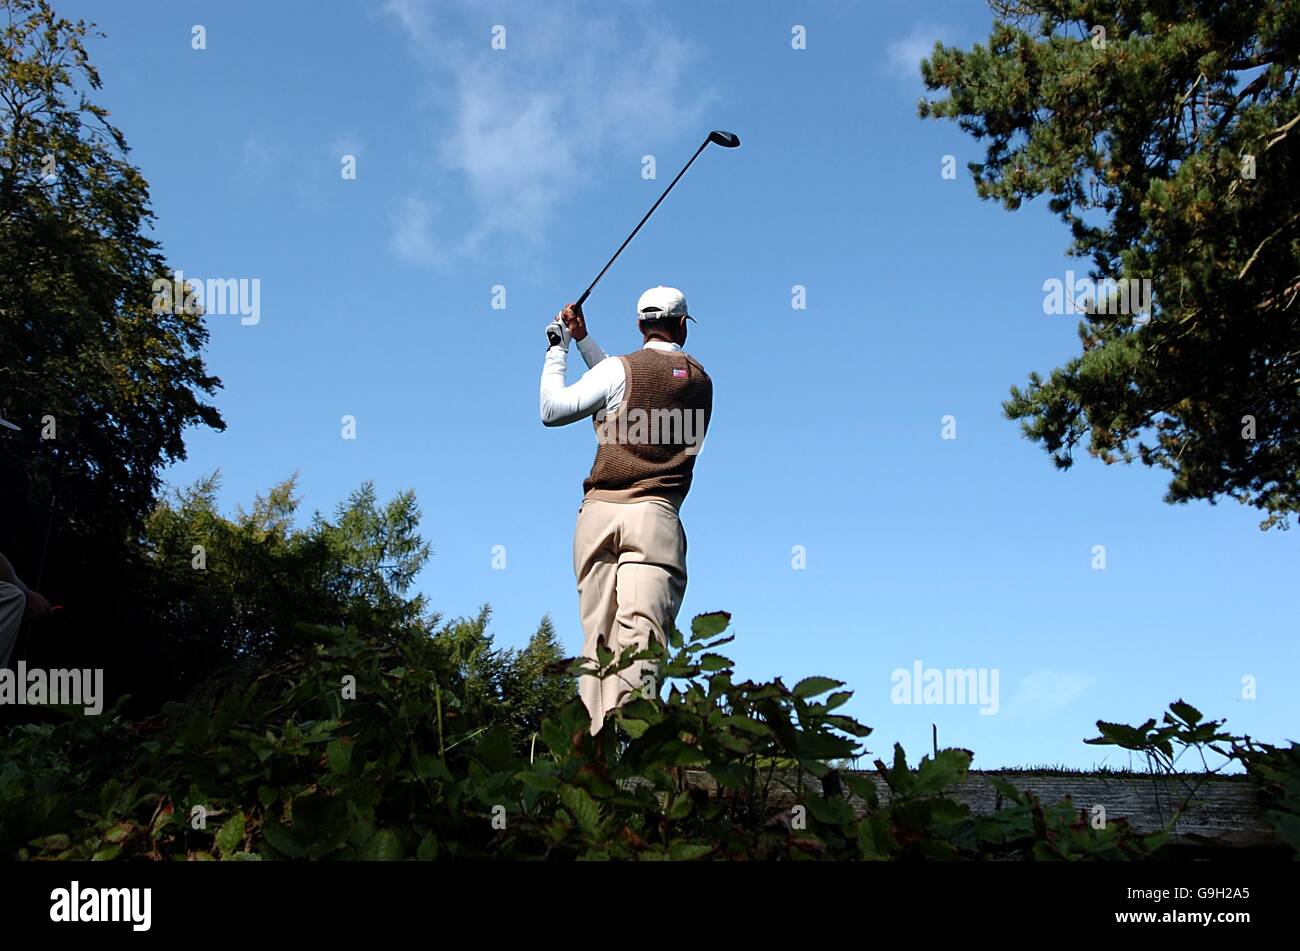 Golf - 36. Rydercup - Praxis - K Club Stockfoto